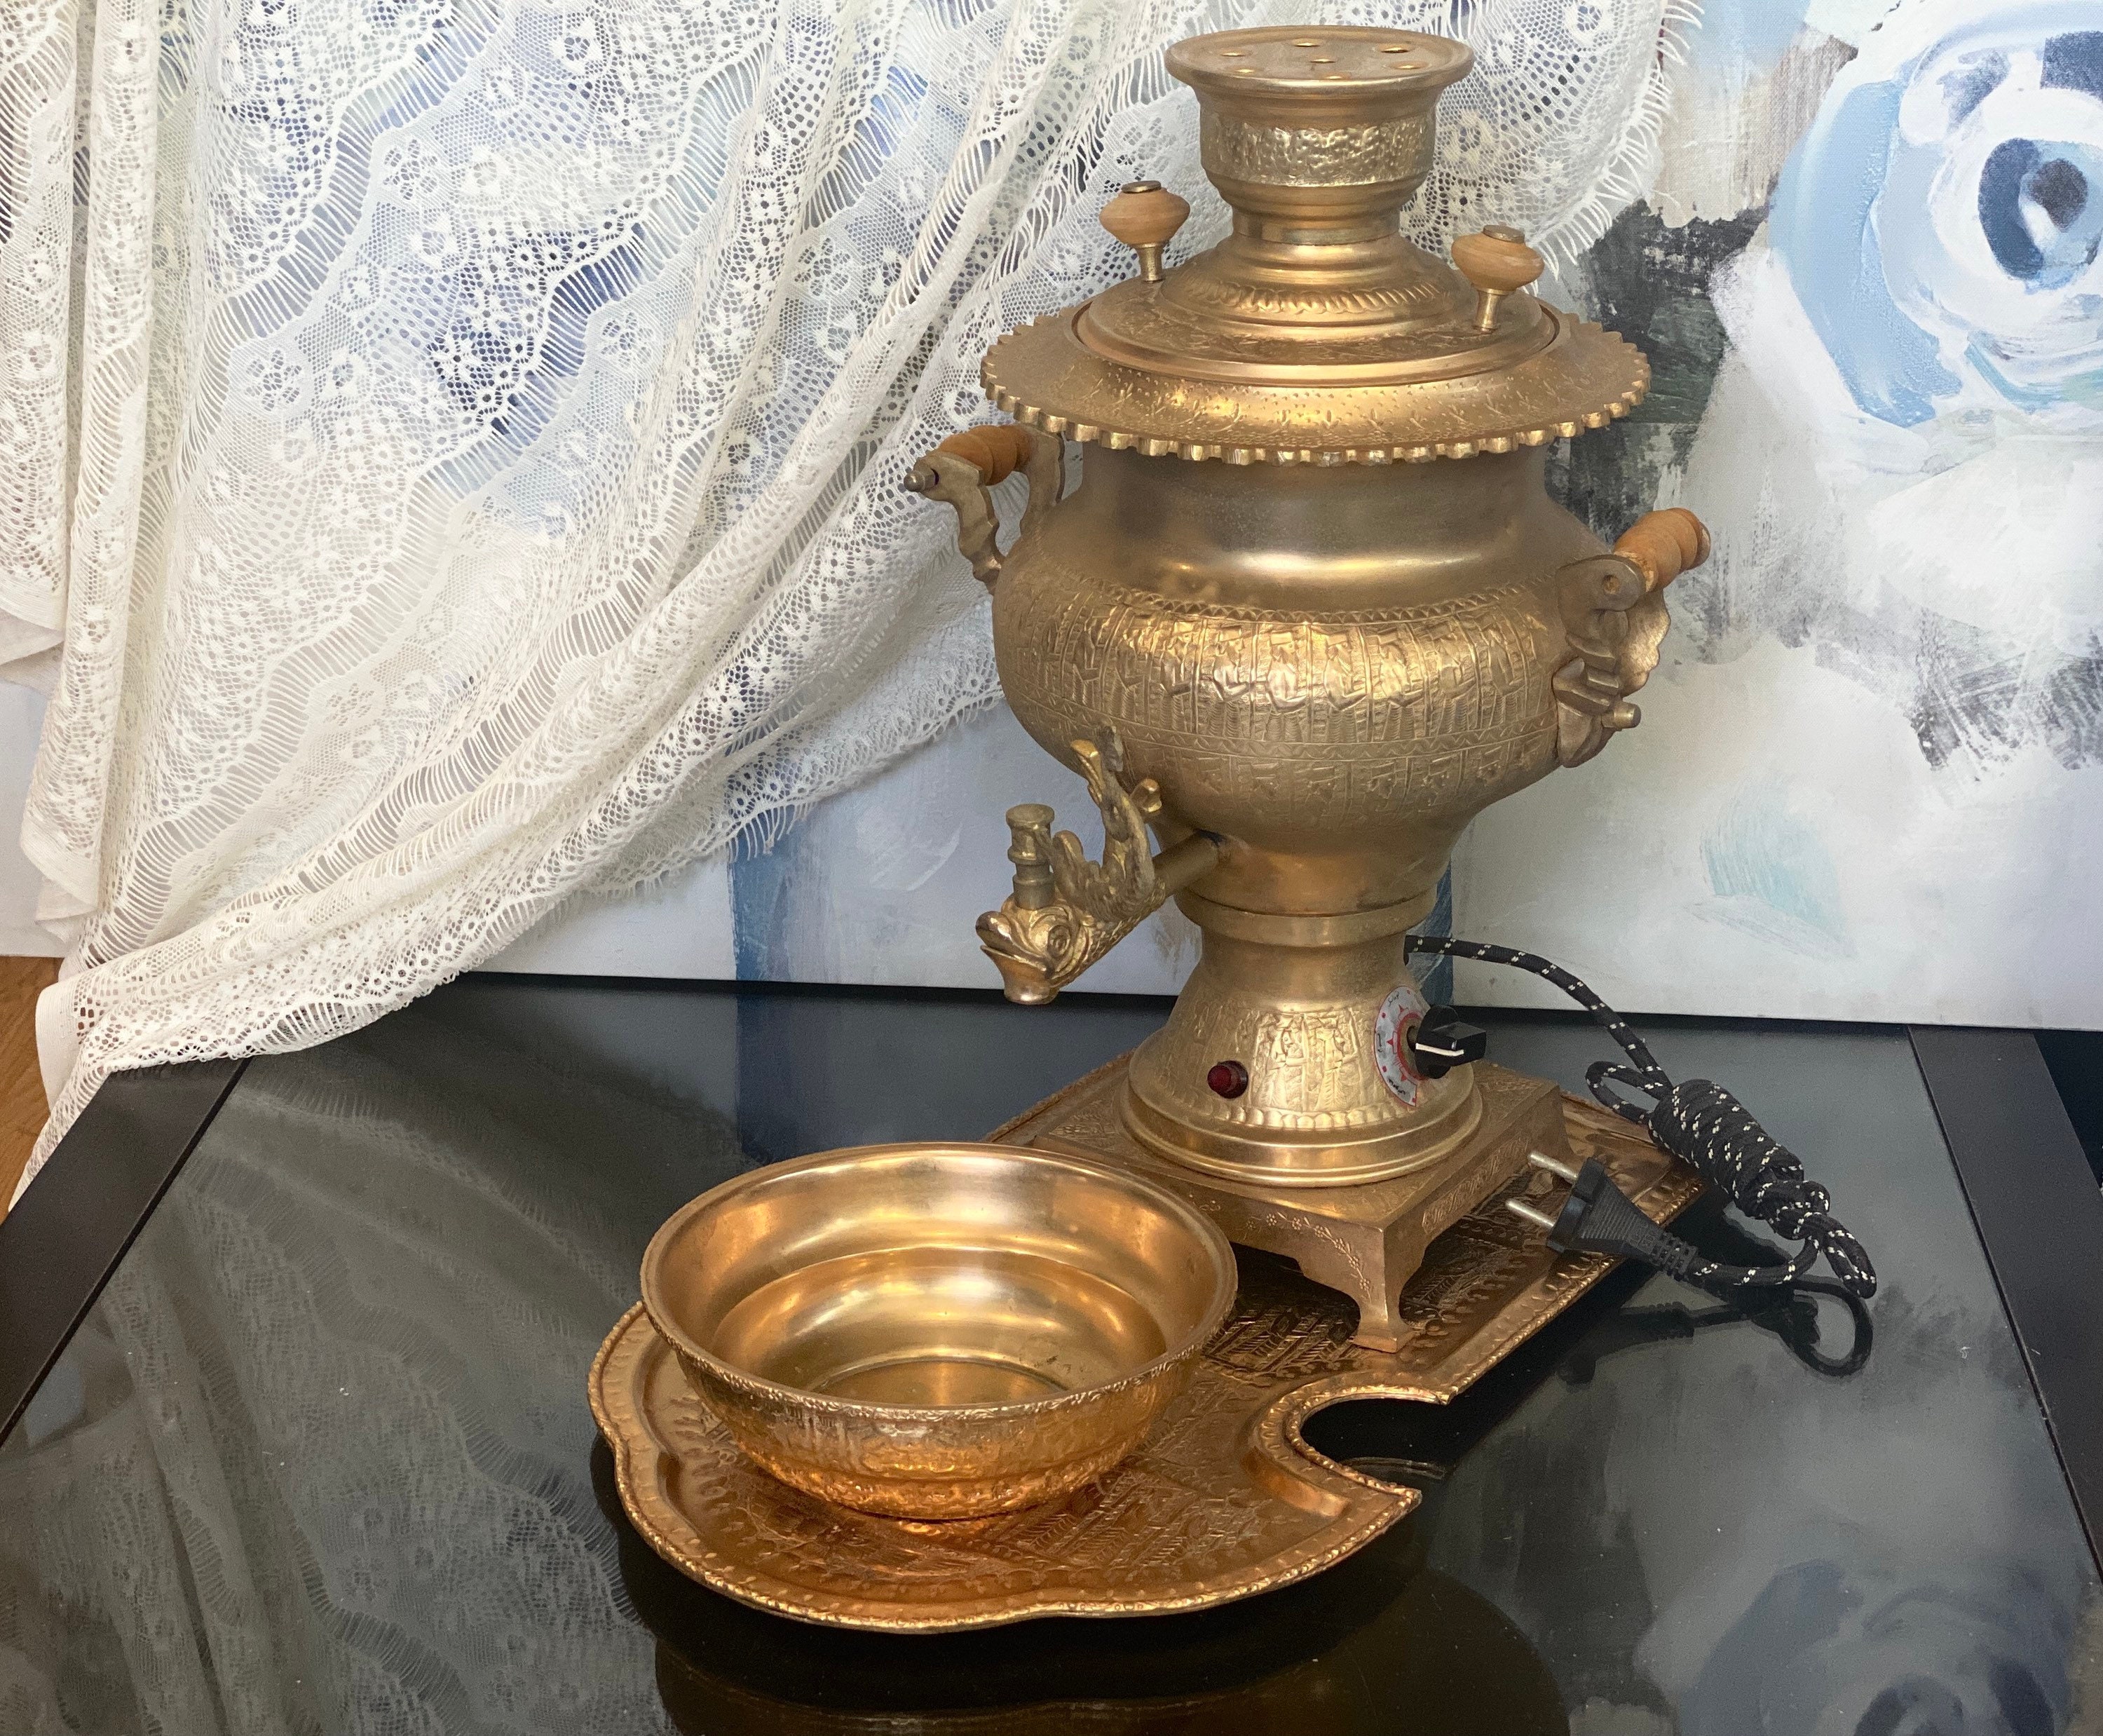 Antique Gold Brass Samovar Tray Bowl Persian Tea Serving Ancient Achaemenid  Empire Art Warming Footed Repoussé Ornate Wedding Decor Rustic -   Finland